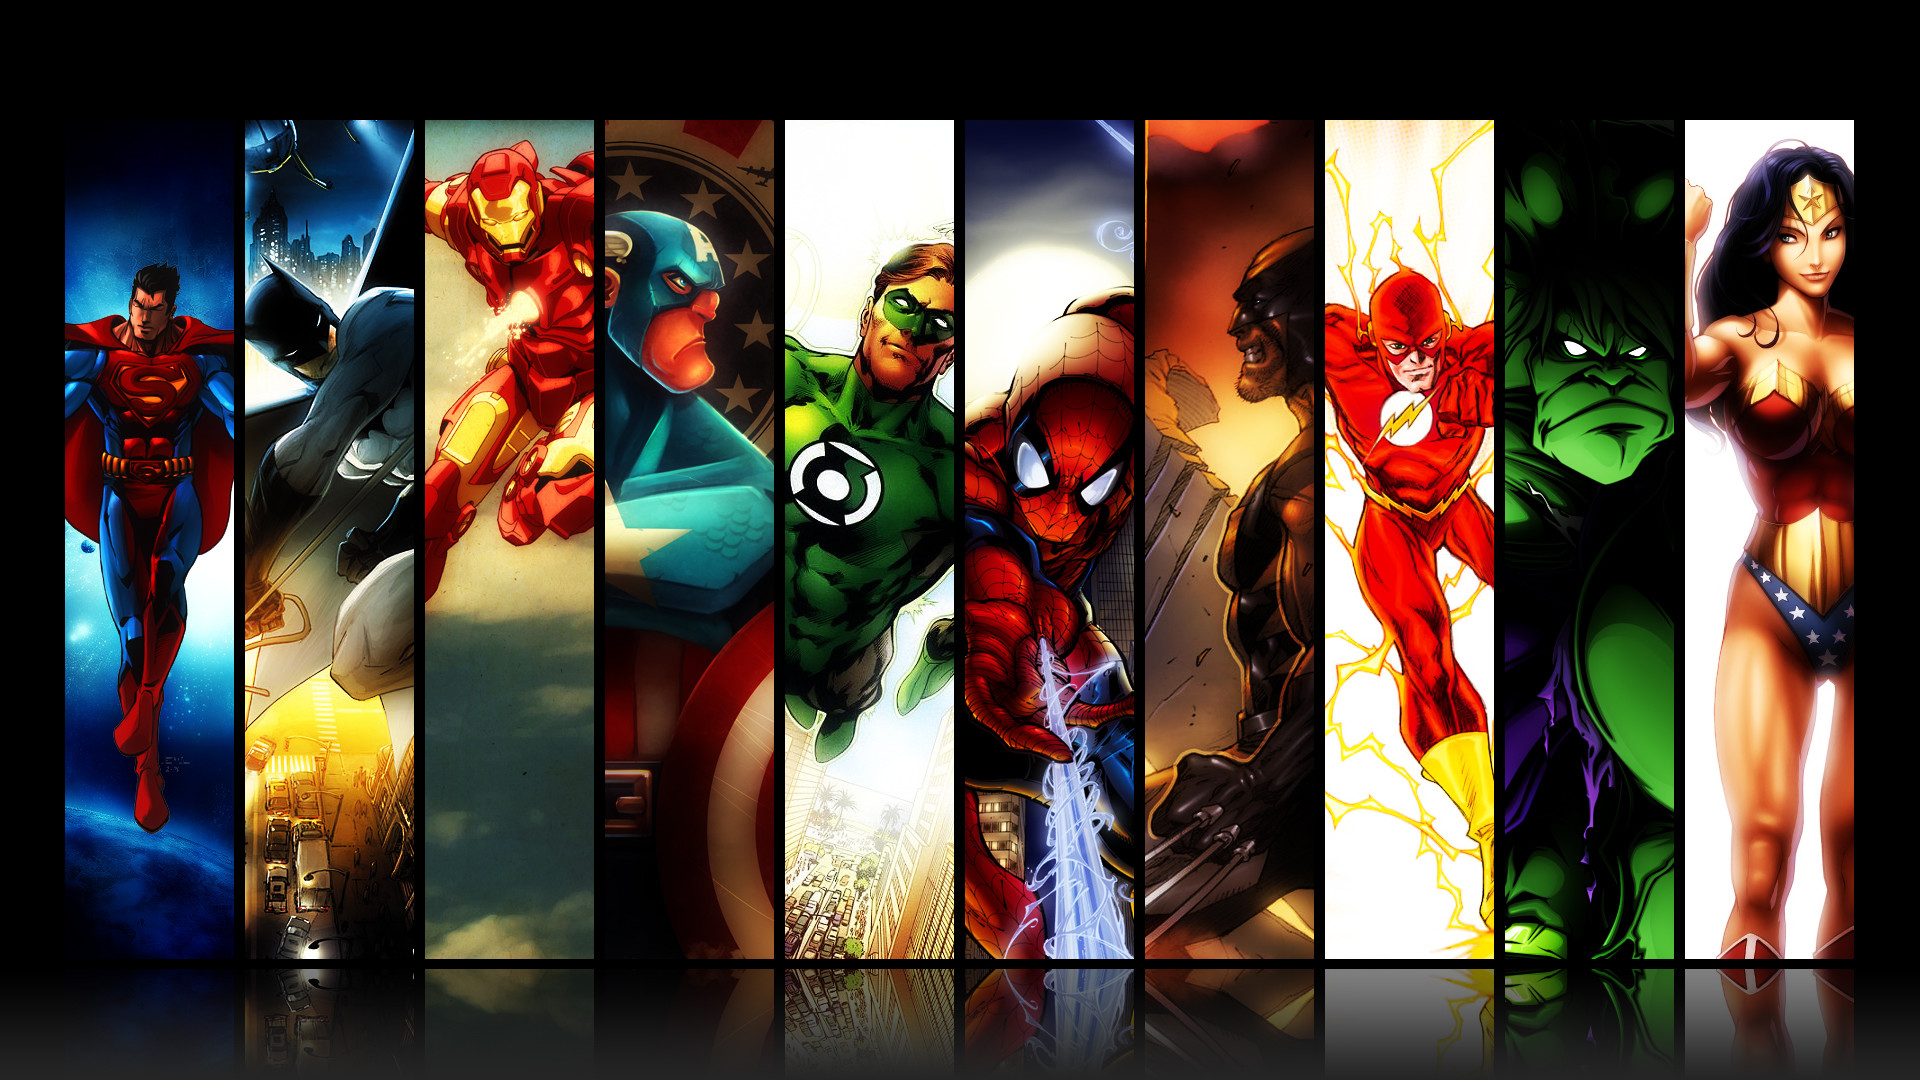 1920x1080 Marvel Heroes Comics wallpaper HD. Free desktop background 2016 in .